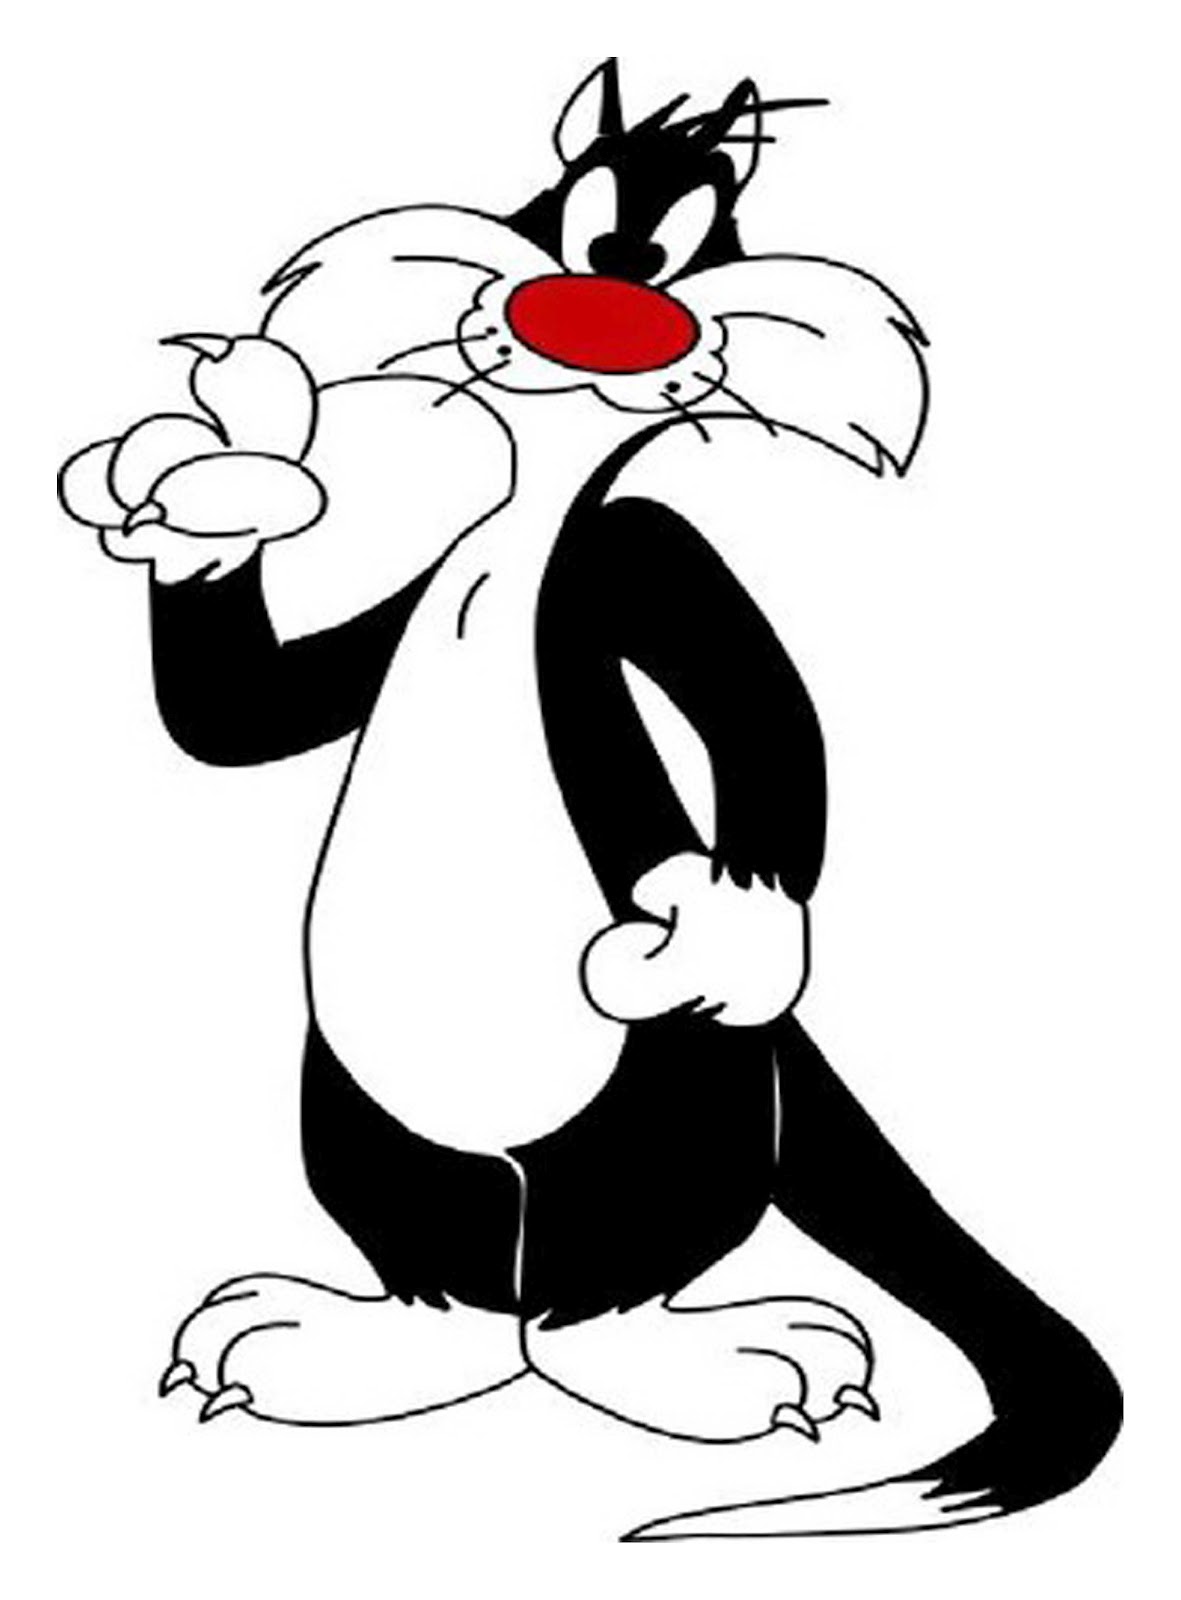 Walt Disney Looney Tunes Sylvester The Cat Cartoon Wallpaper